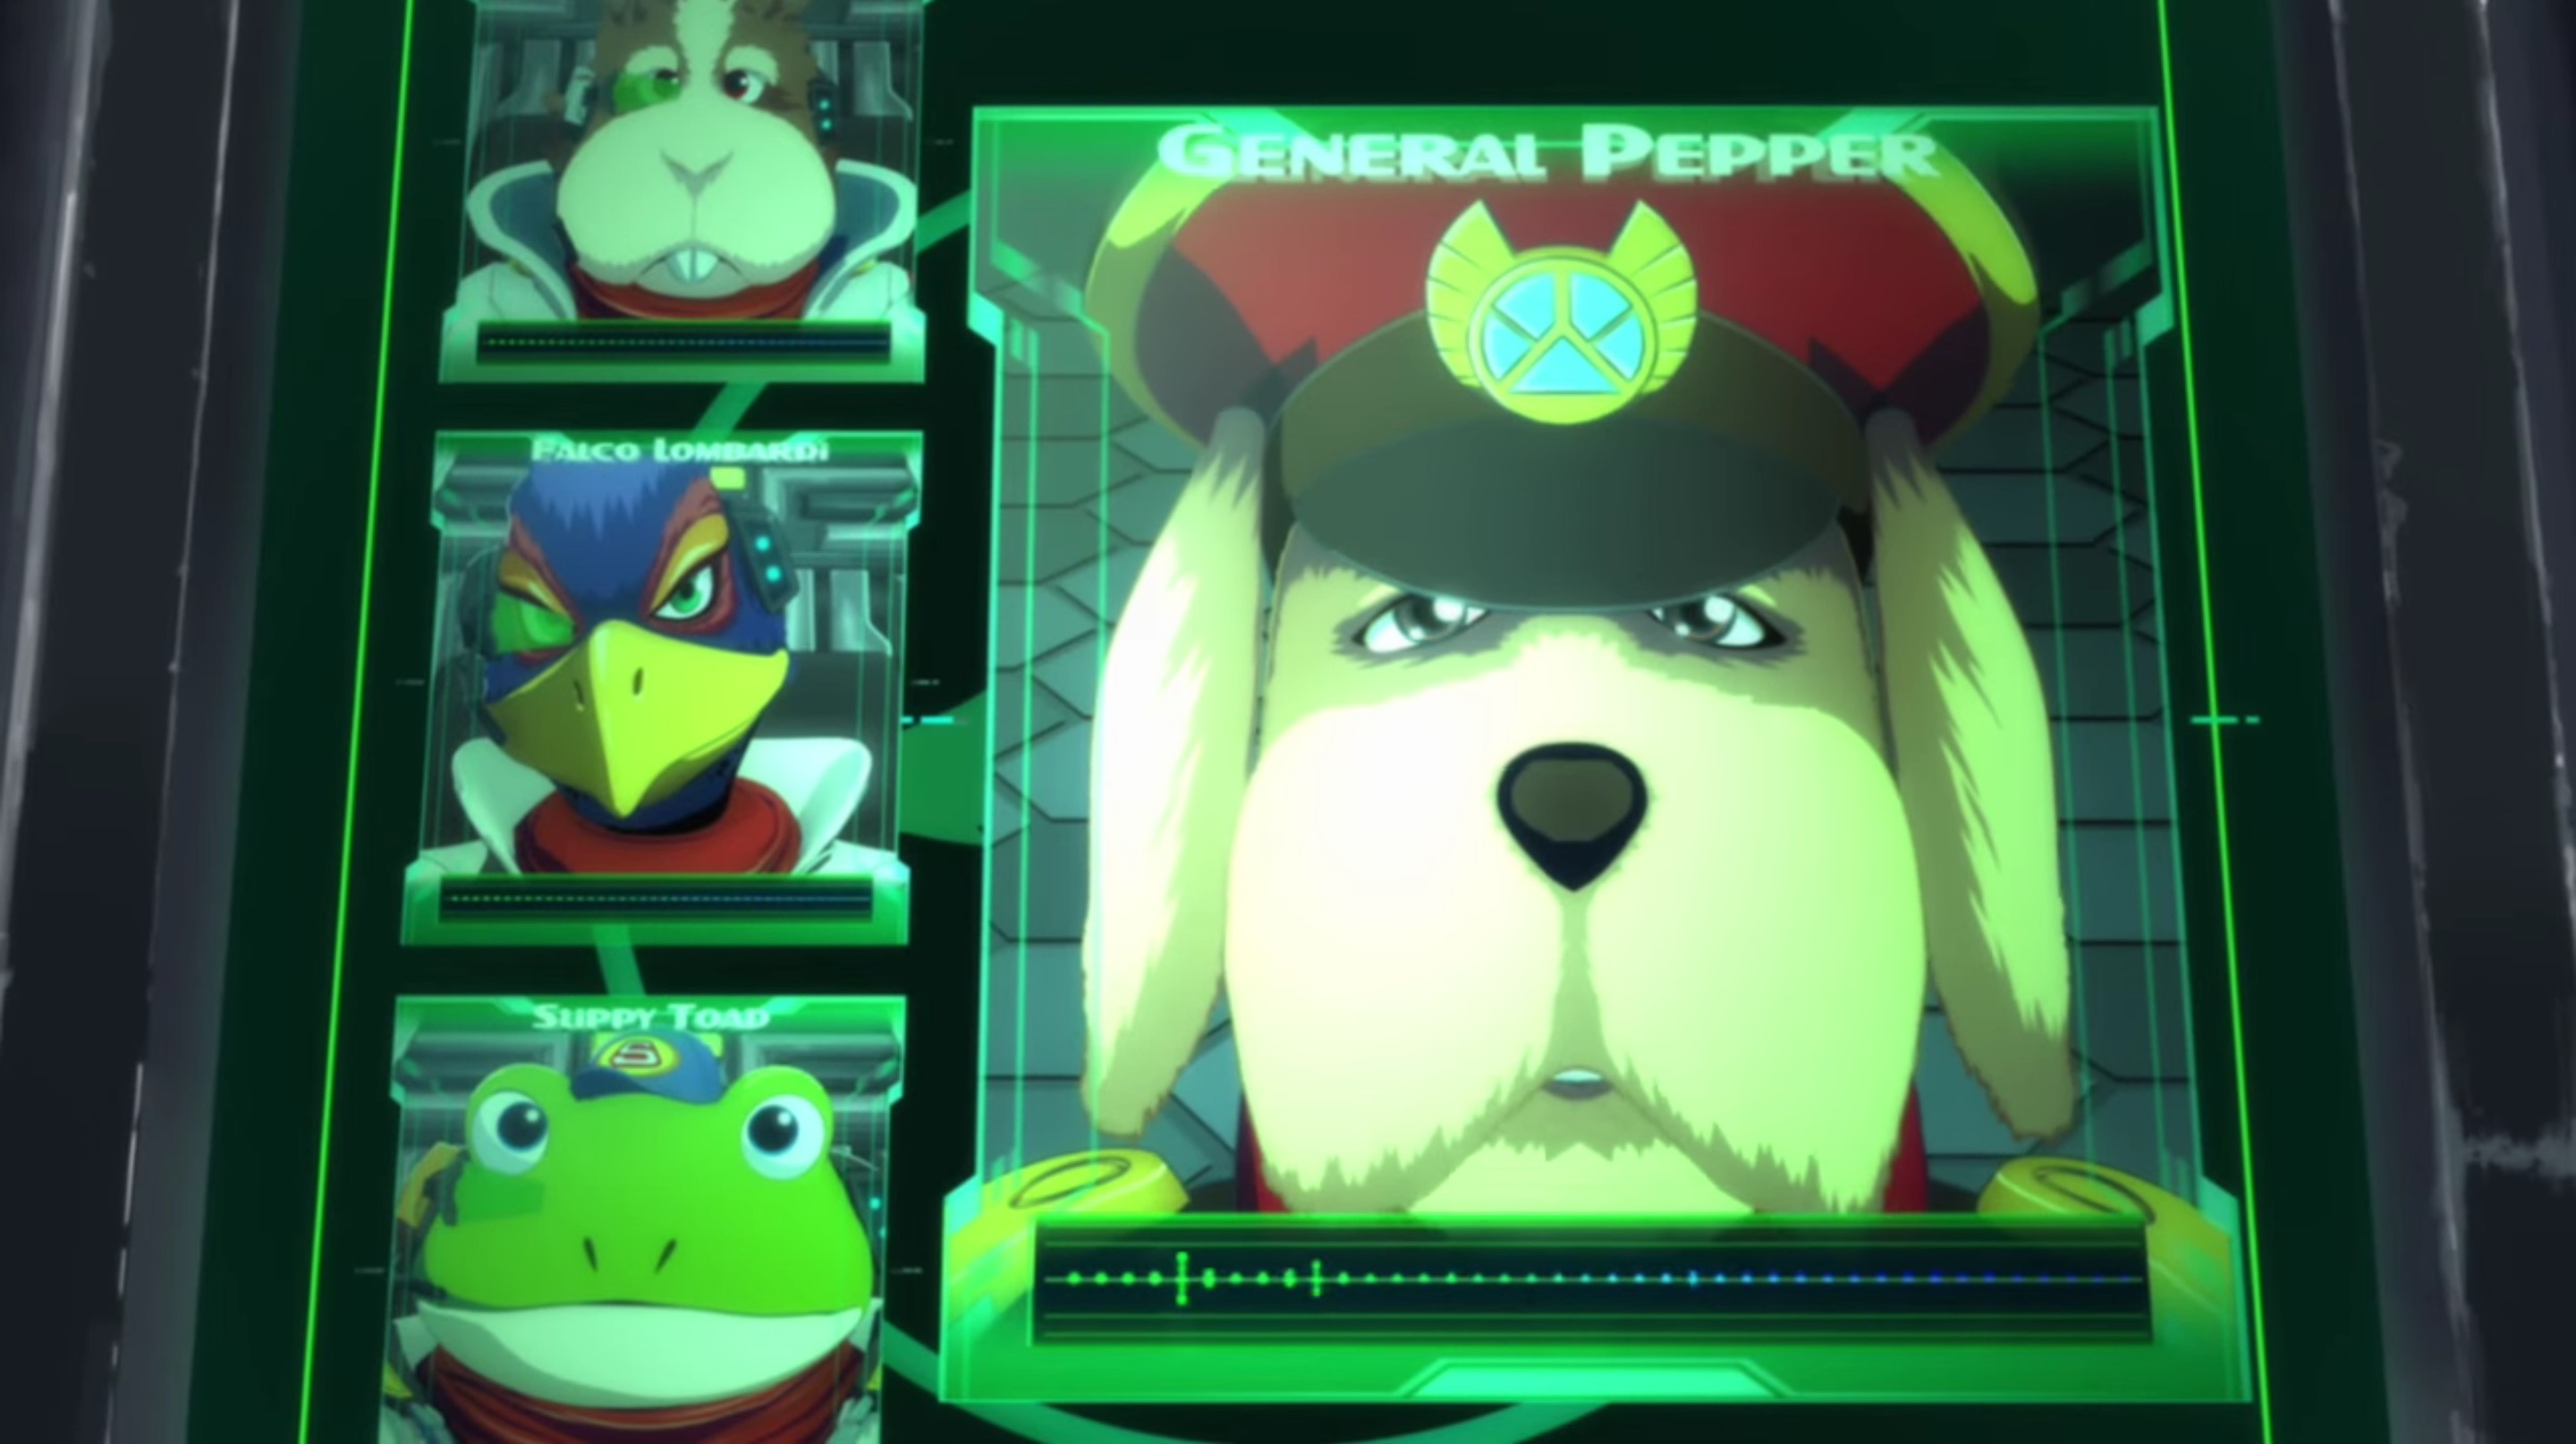 General Pepper, Nintendo